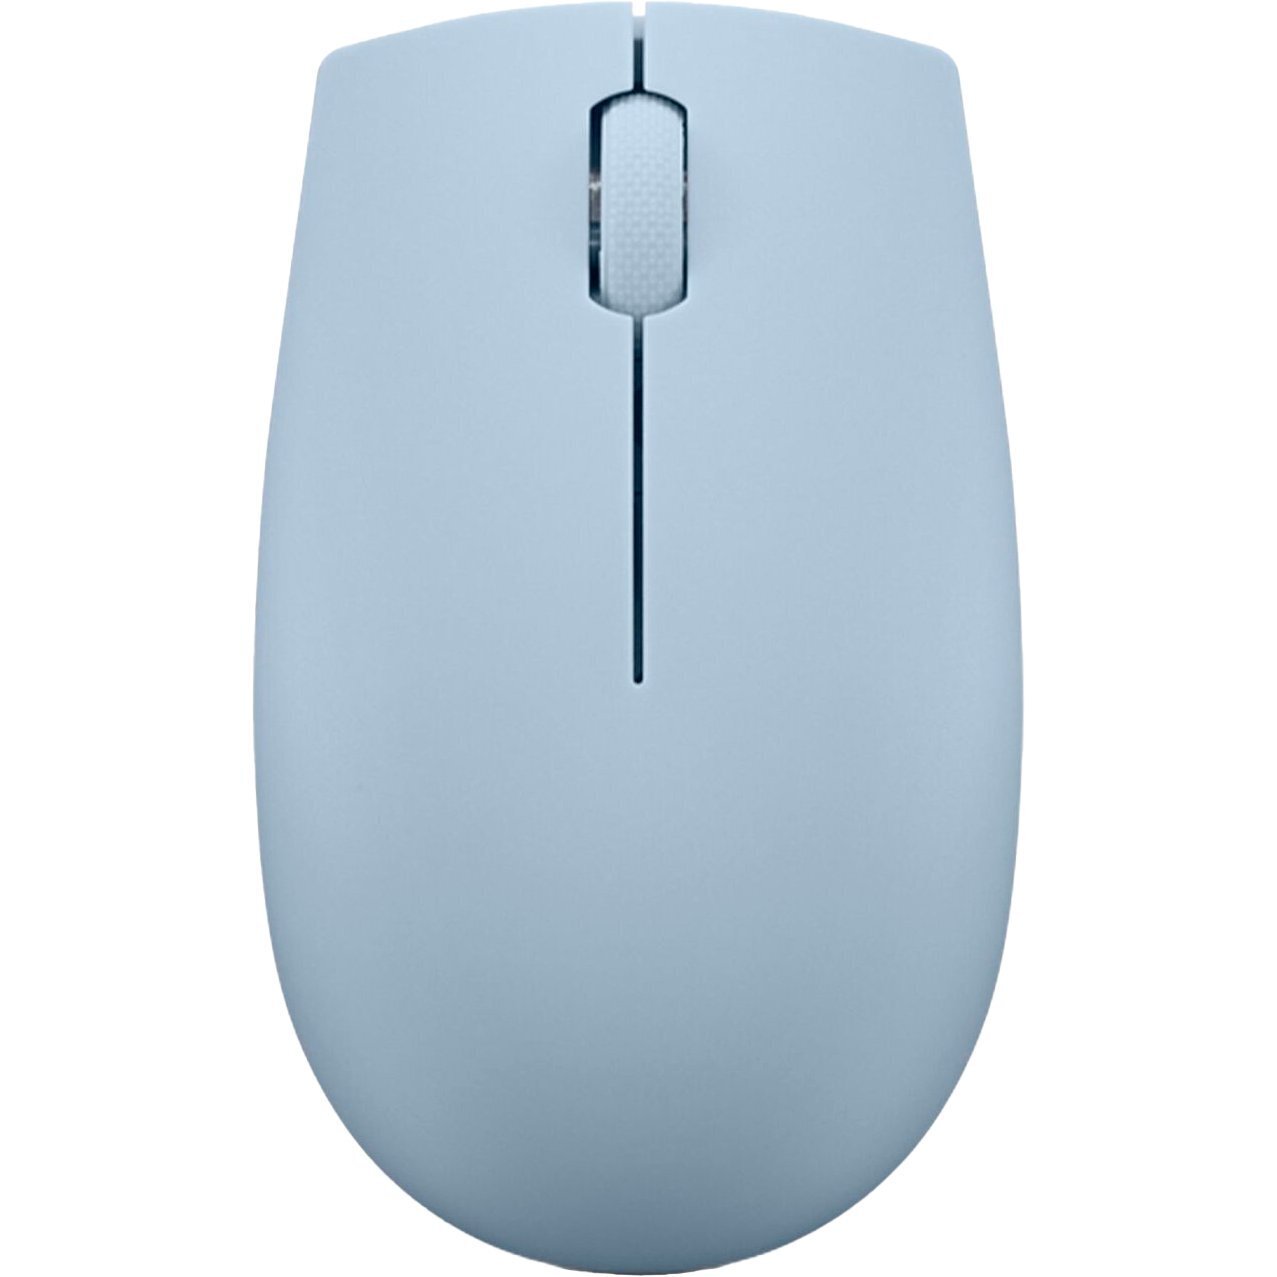 Lenovo 300 Compact Wireless Mouse Blue